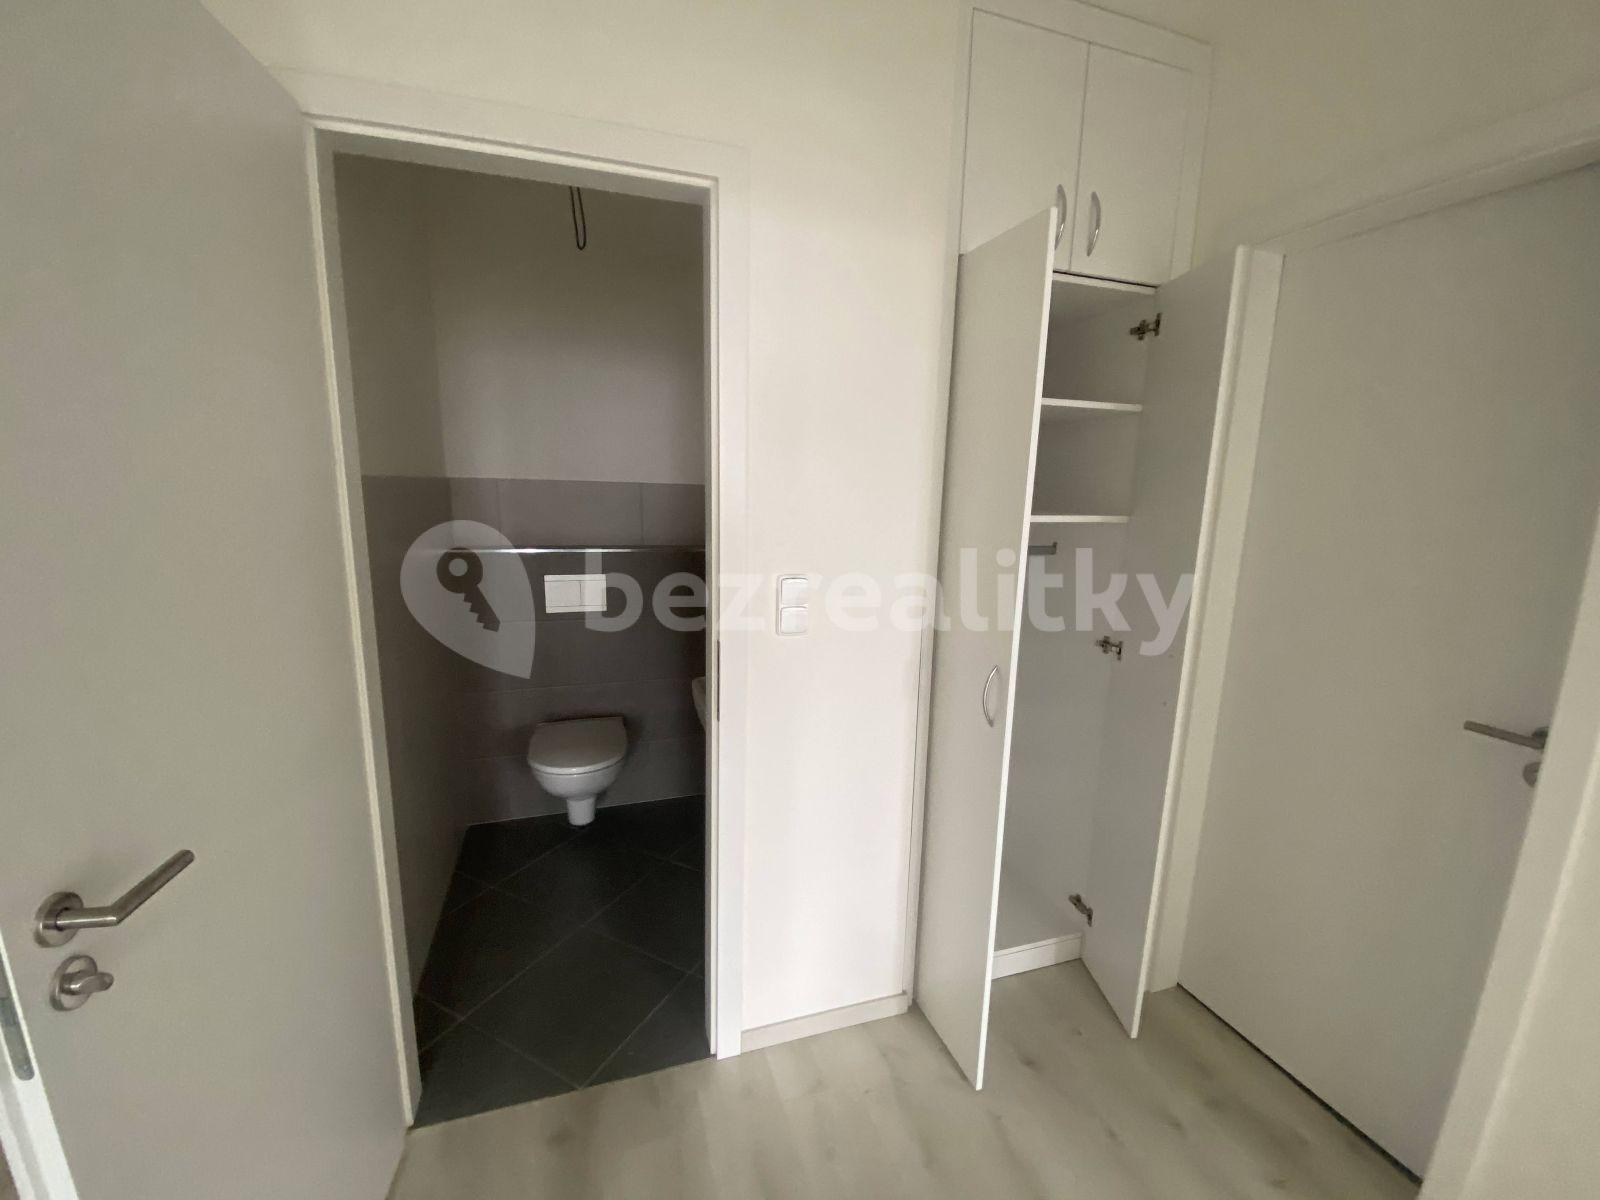 3 bedroom with open-plan kitchen flat to rent, 98 m², Gollové, Prague, Prague